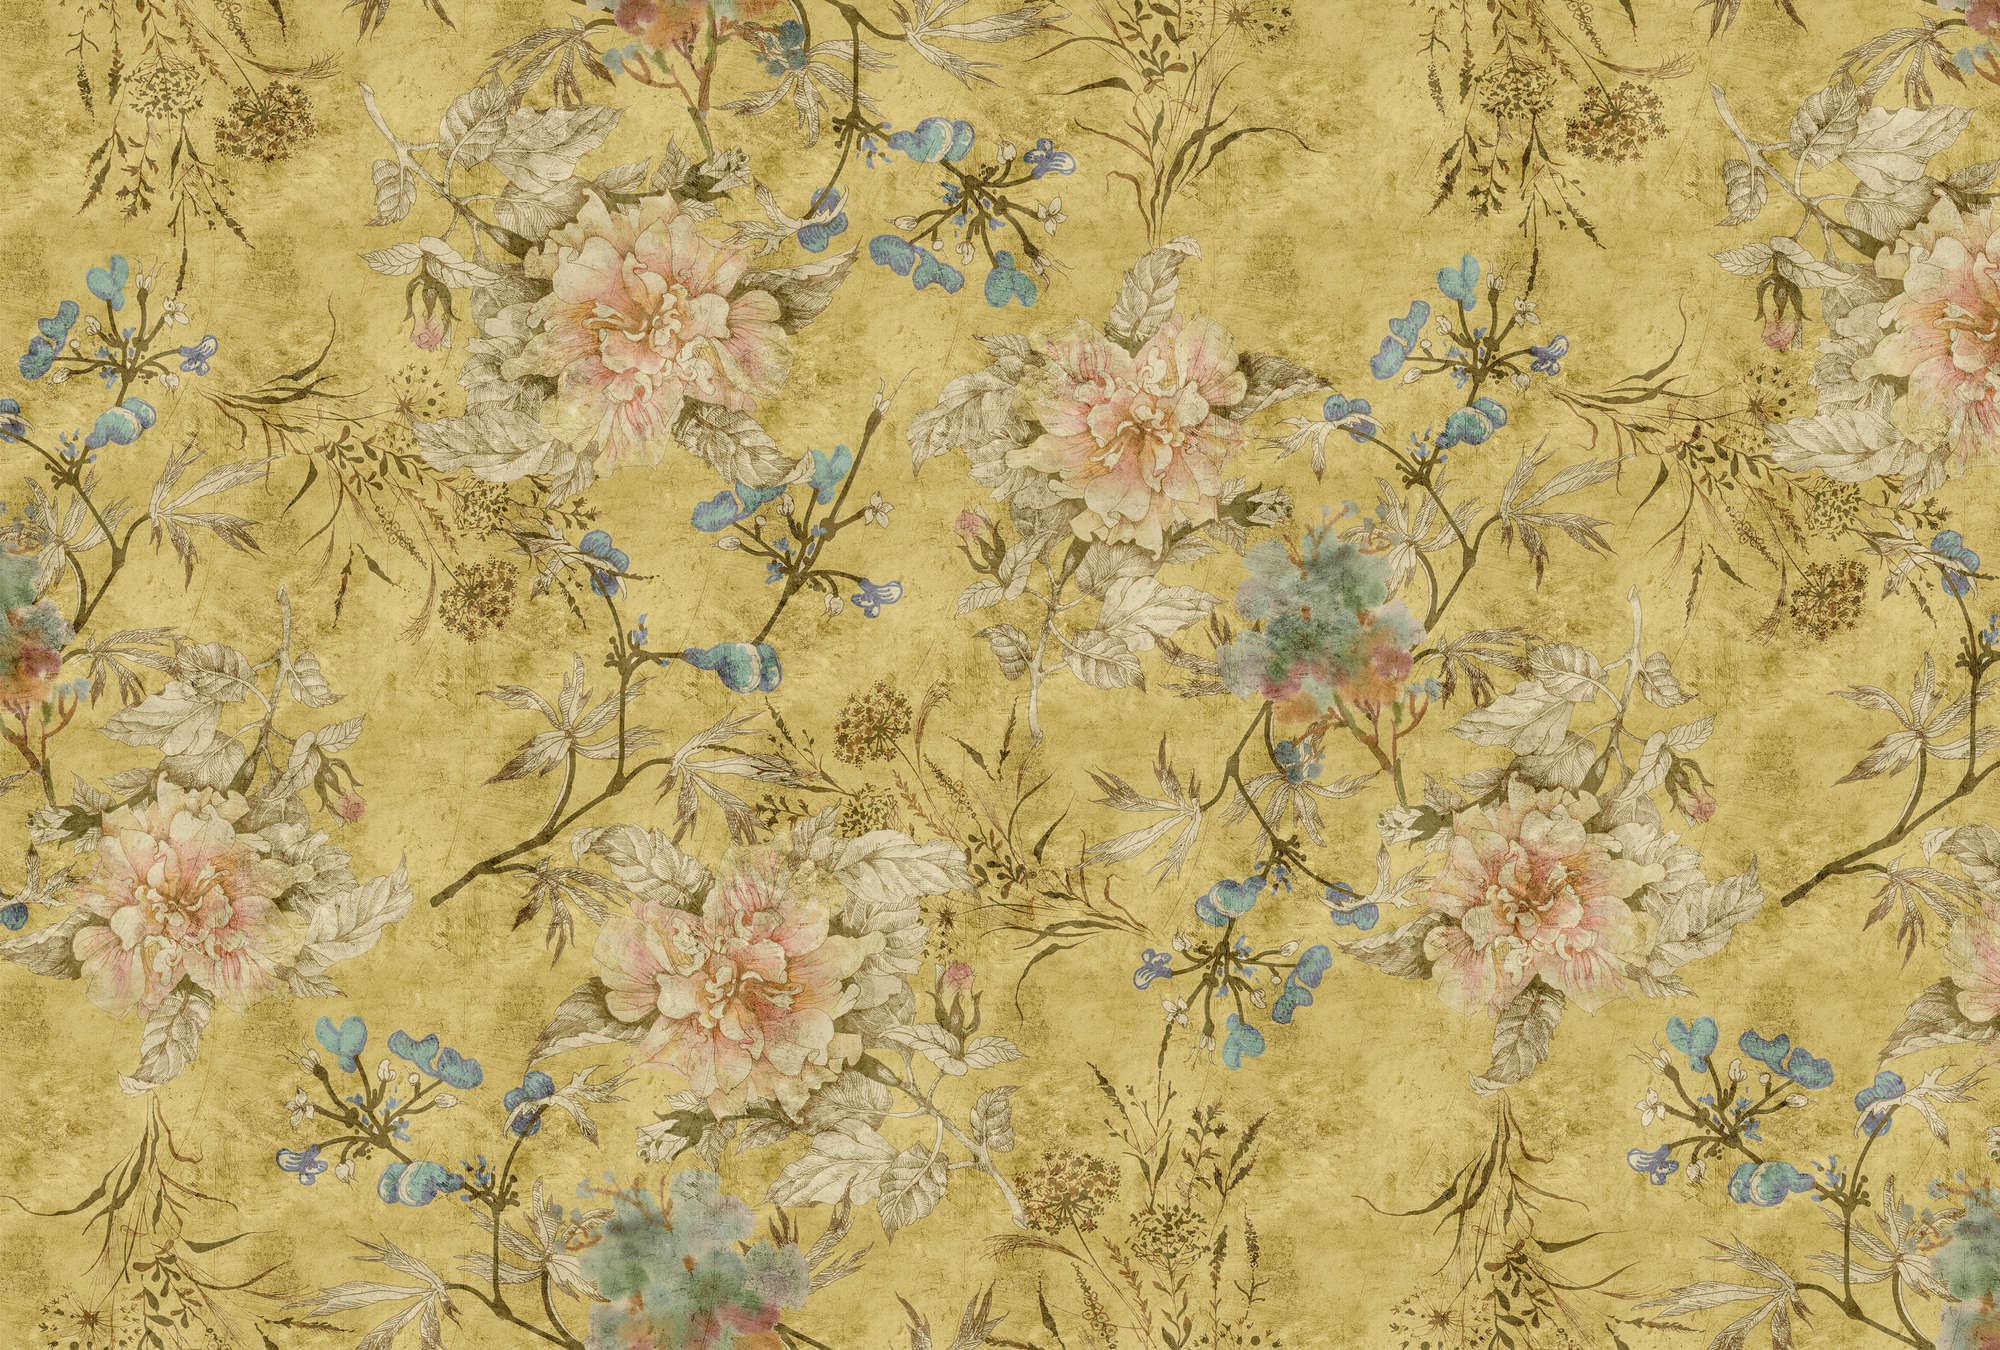             Tenderblossom 2 - Papier peint fleuri vintage - texture grattée - jaune | Premium intissé lisse
        